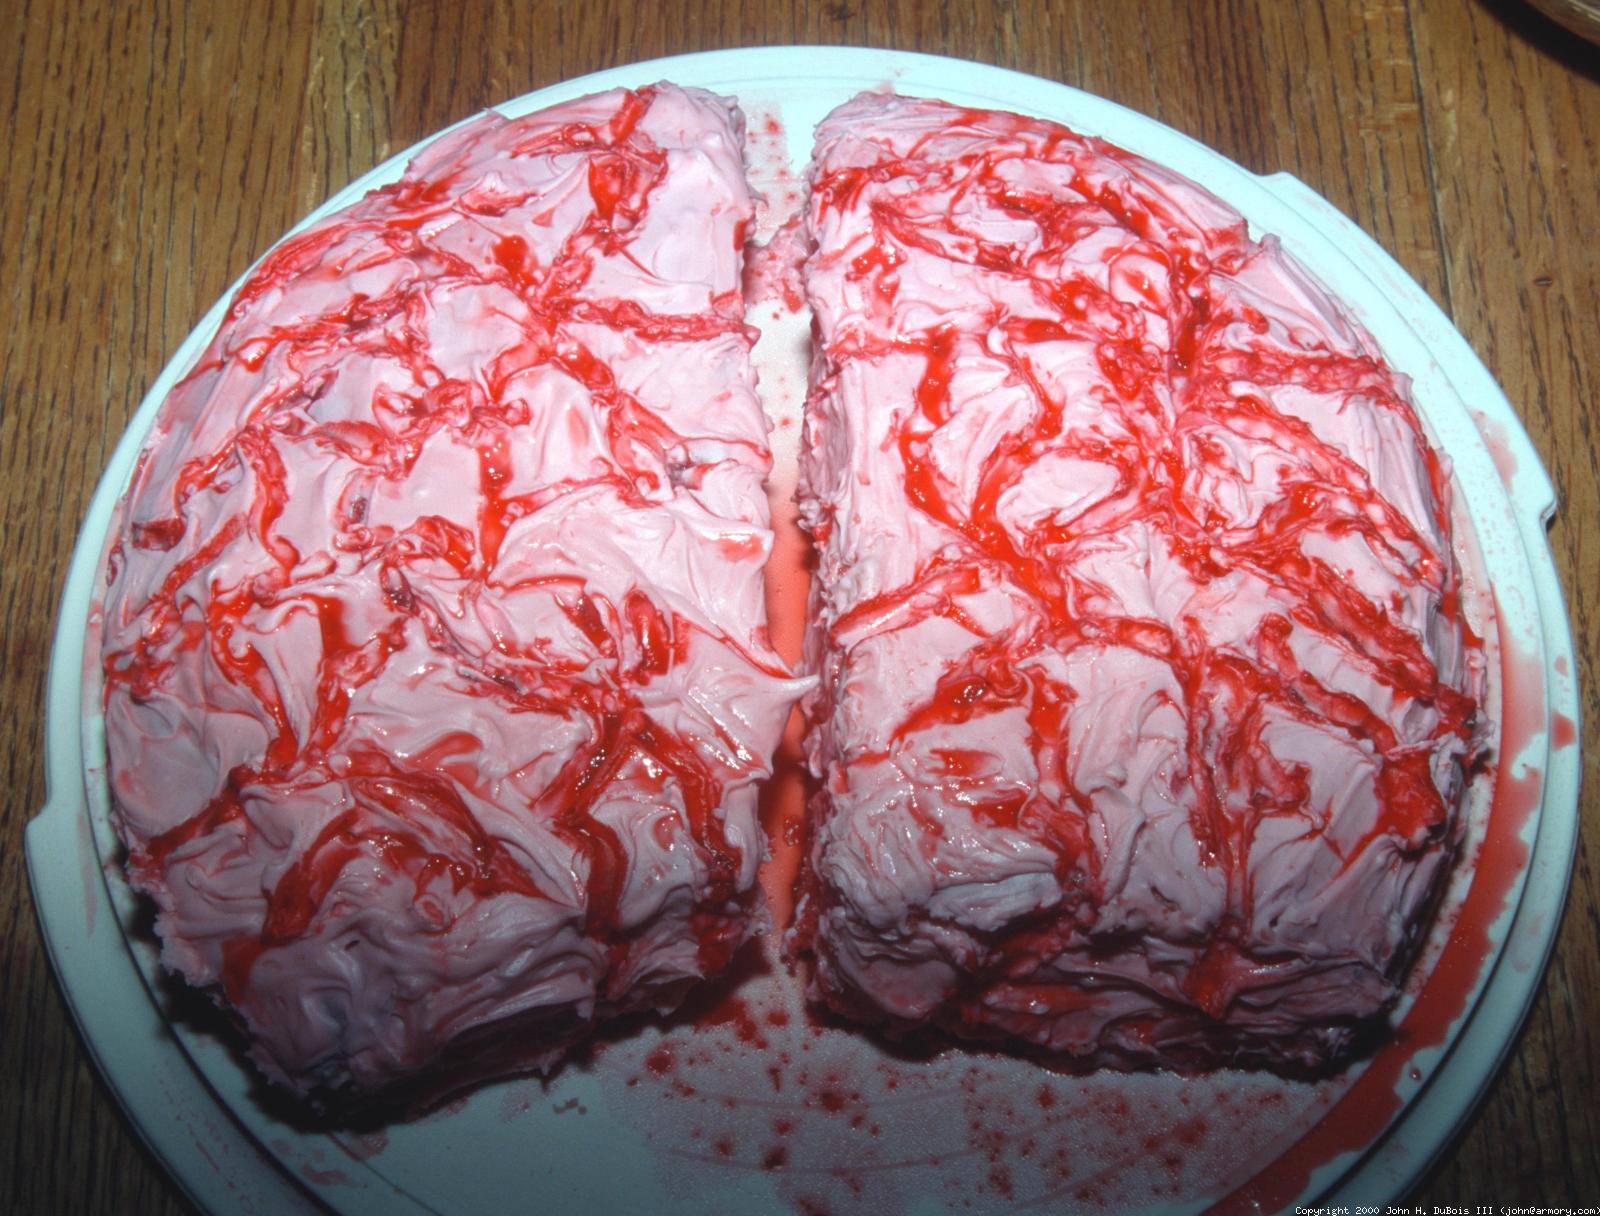 Lung Cake